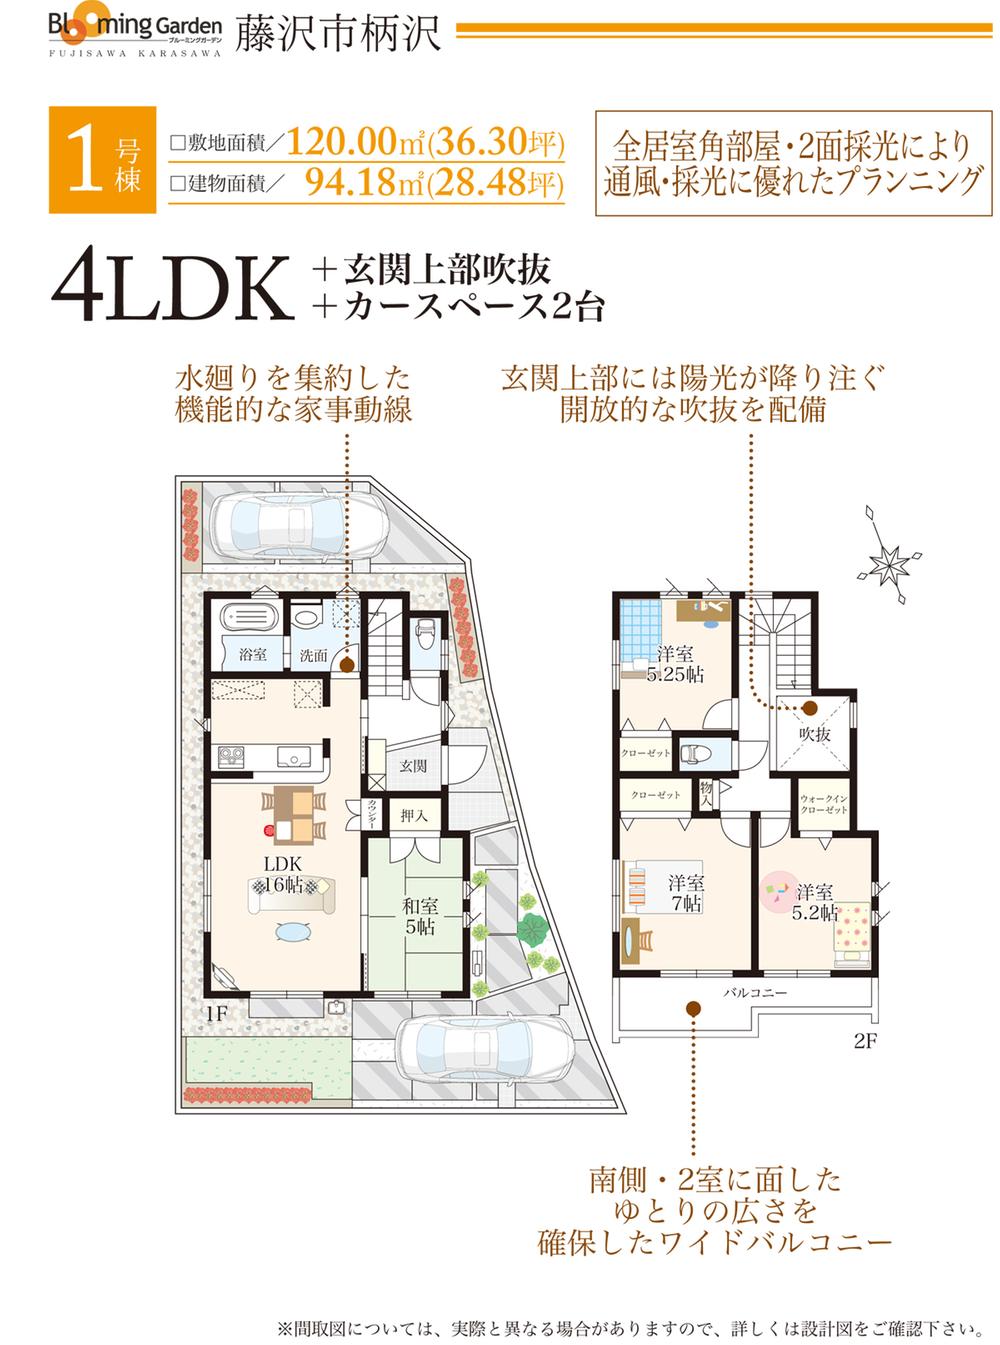 Floor plan. Price 37,800,000 yen, 4LDK, Land area 120 sq m , Building area 94.18 sq m